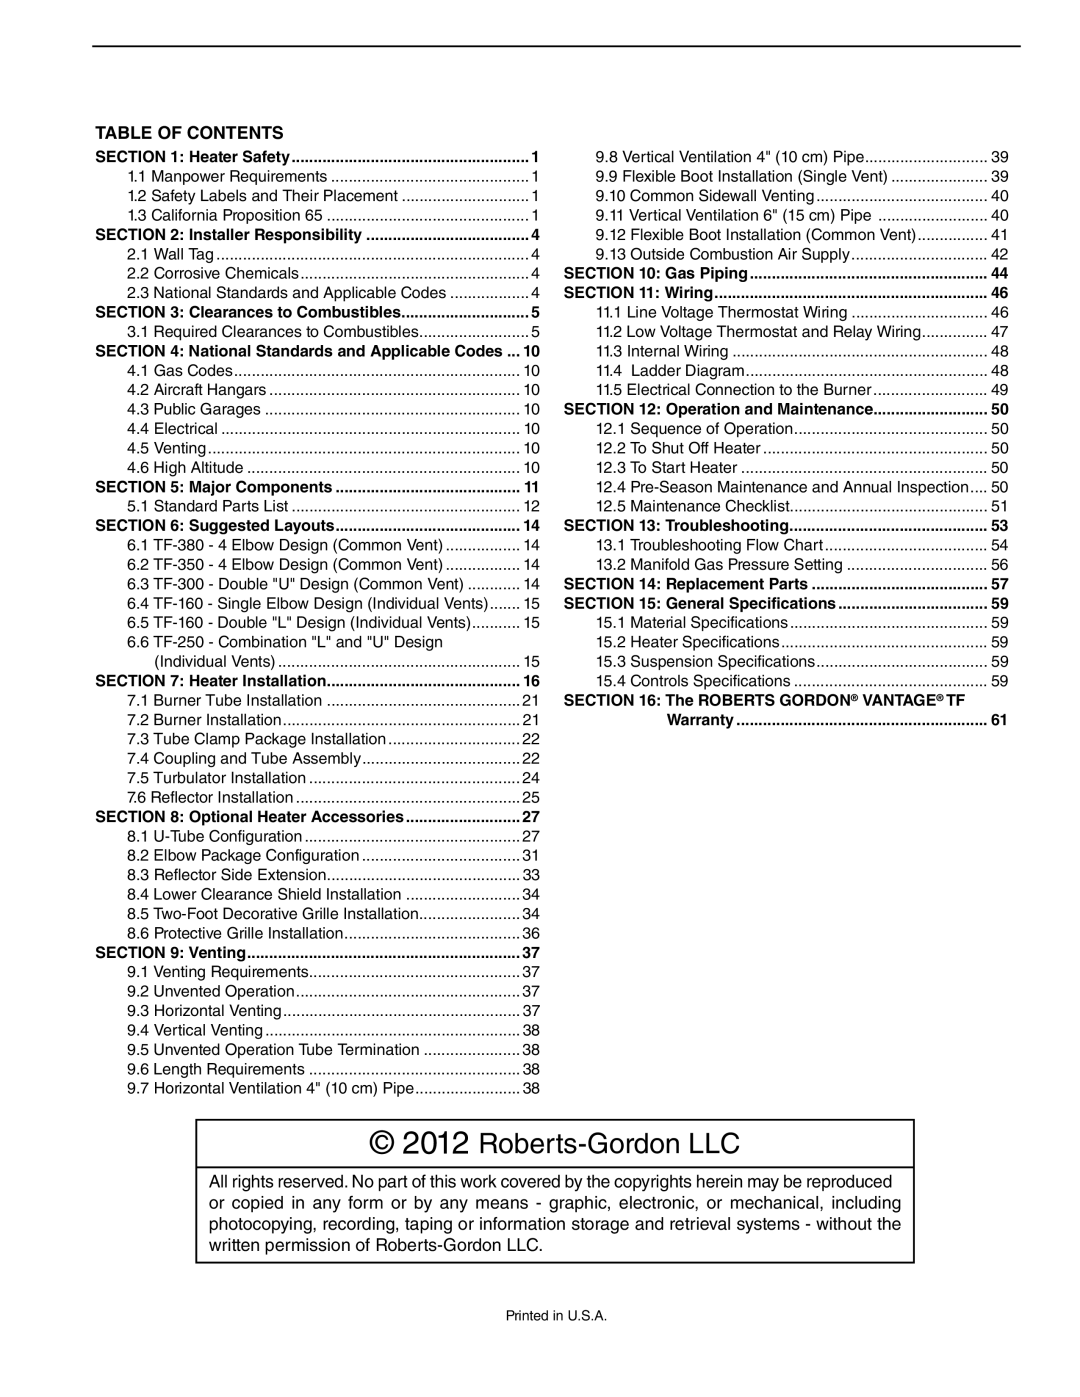 Roberts Gorden TF-200, TF-350, TF-300, TF-120, TF-160, TF-250, TF-380 service manual Roberts-GordonLLC, Table Of Contents 